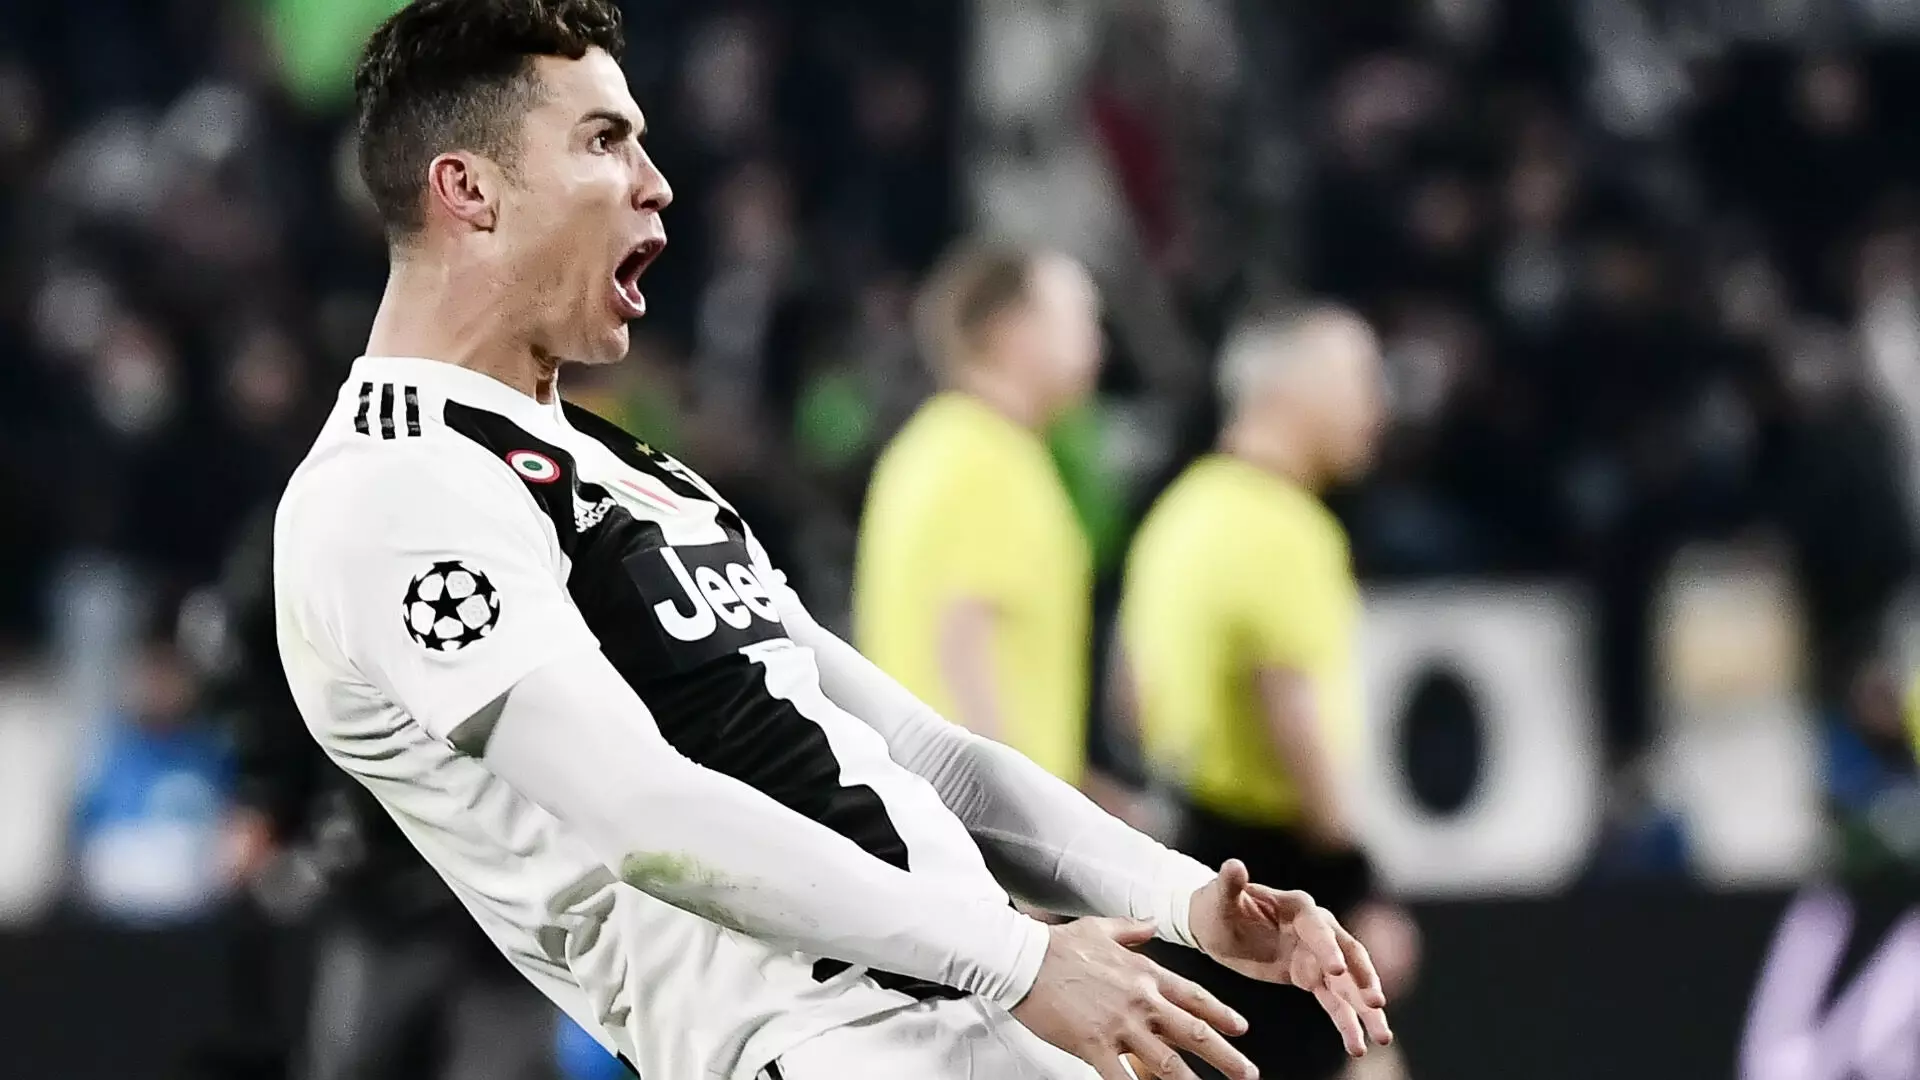 Ronaldo fined $22,000 by UEFA for celebration gesture